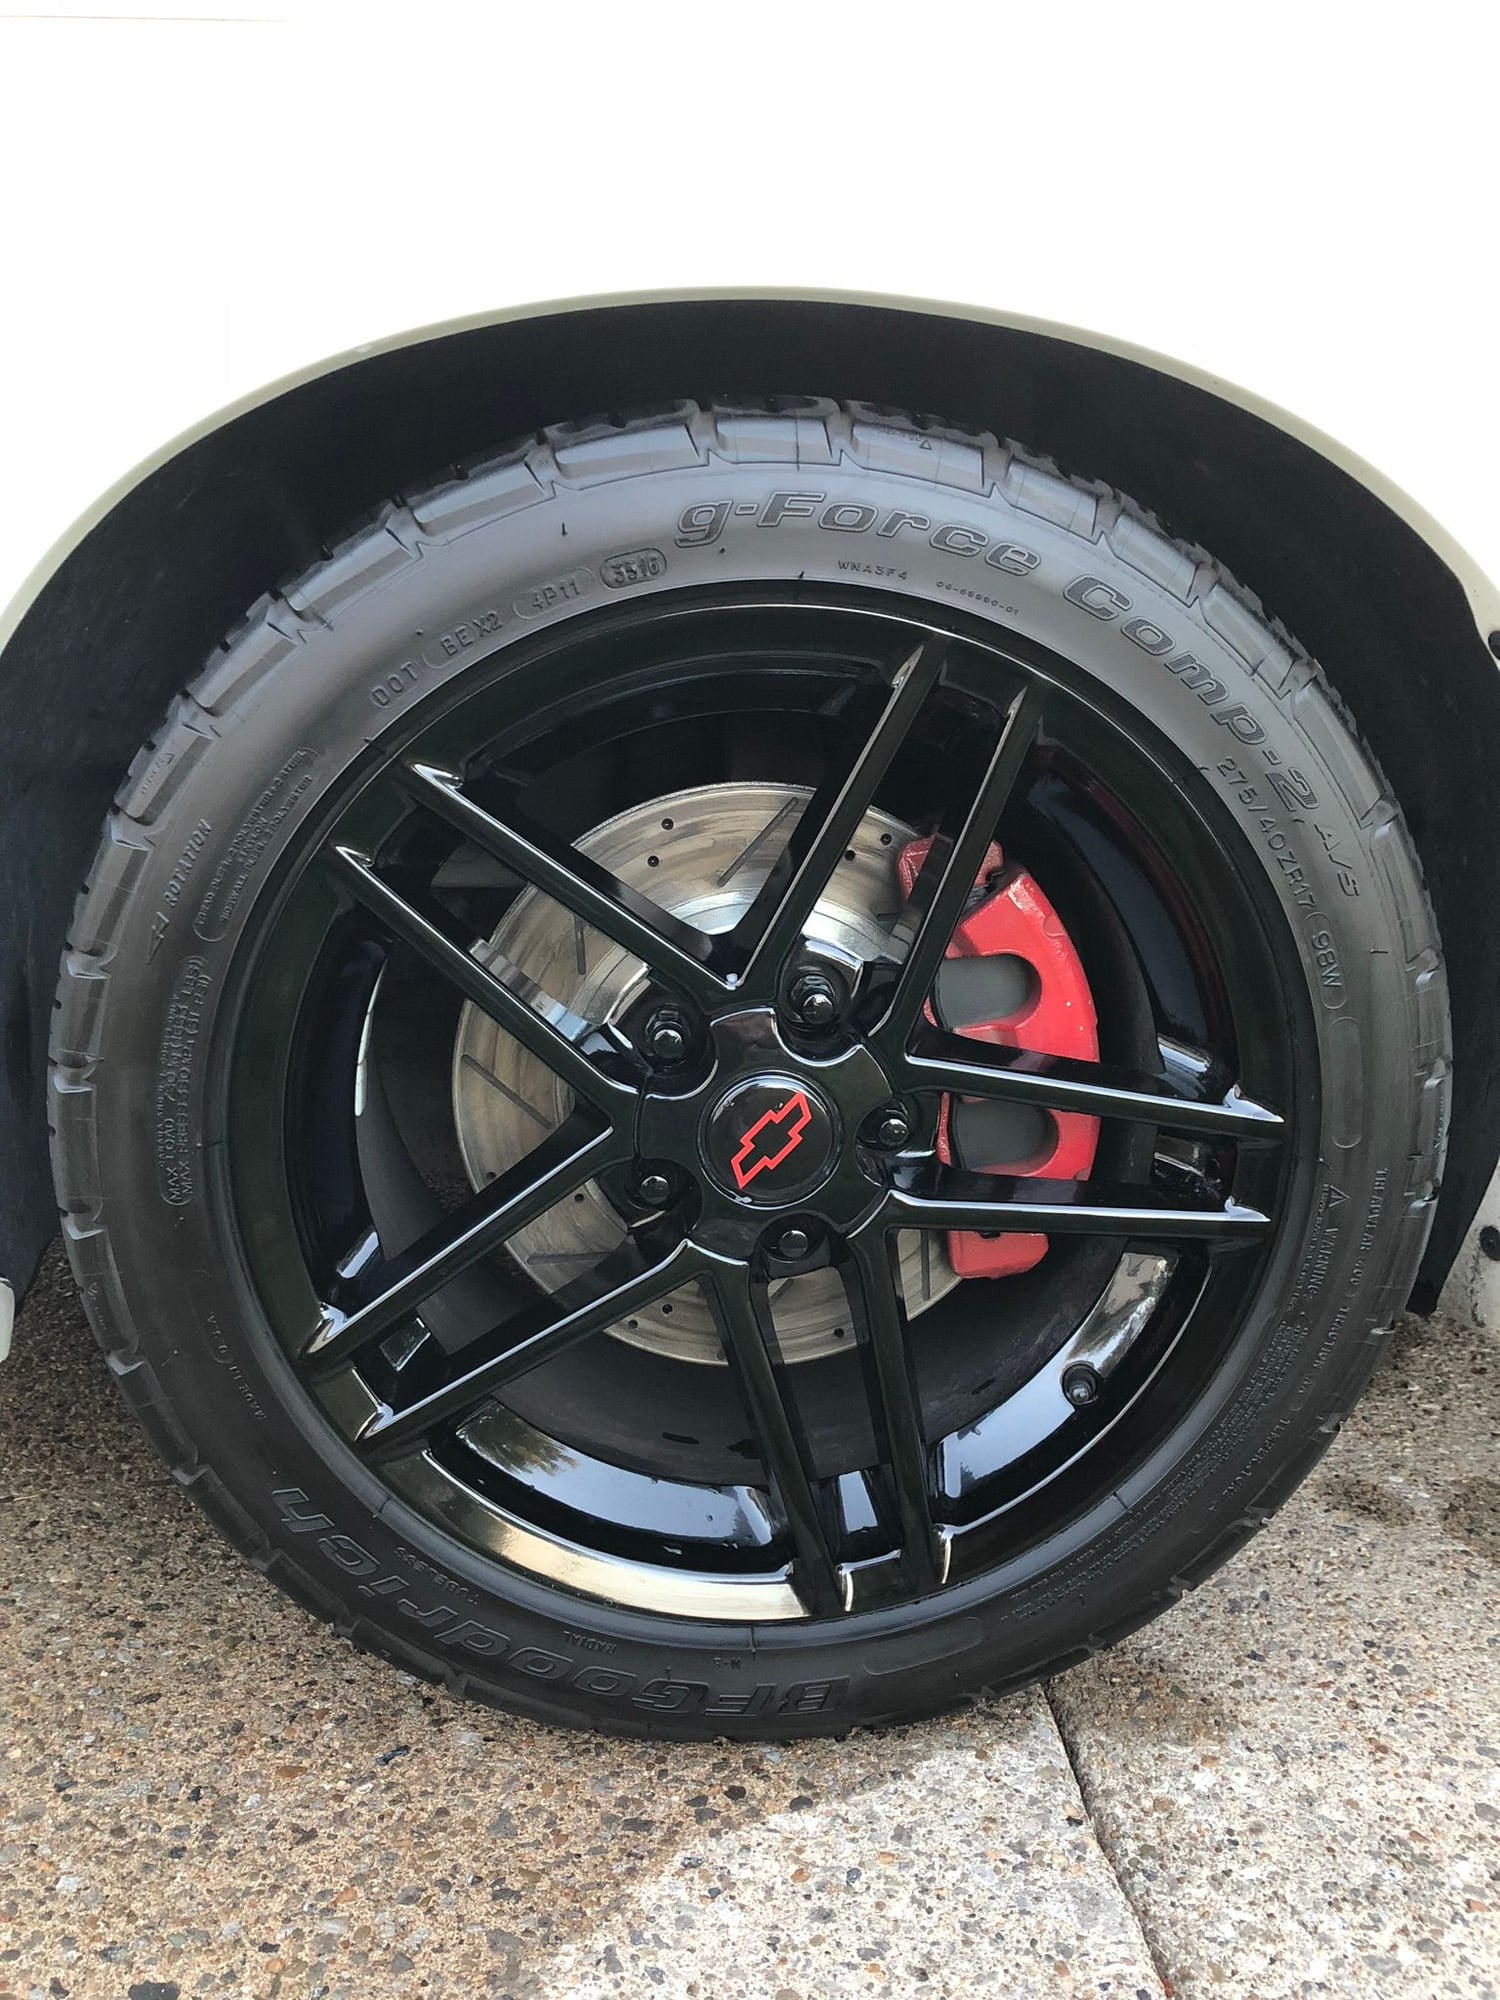 C6 z06 replica wheels - LS1TECH - Camaro and Firebird Forum Discussion